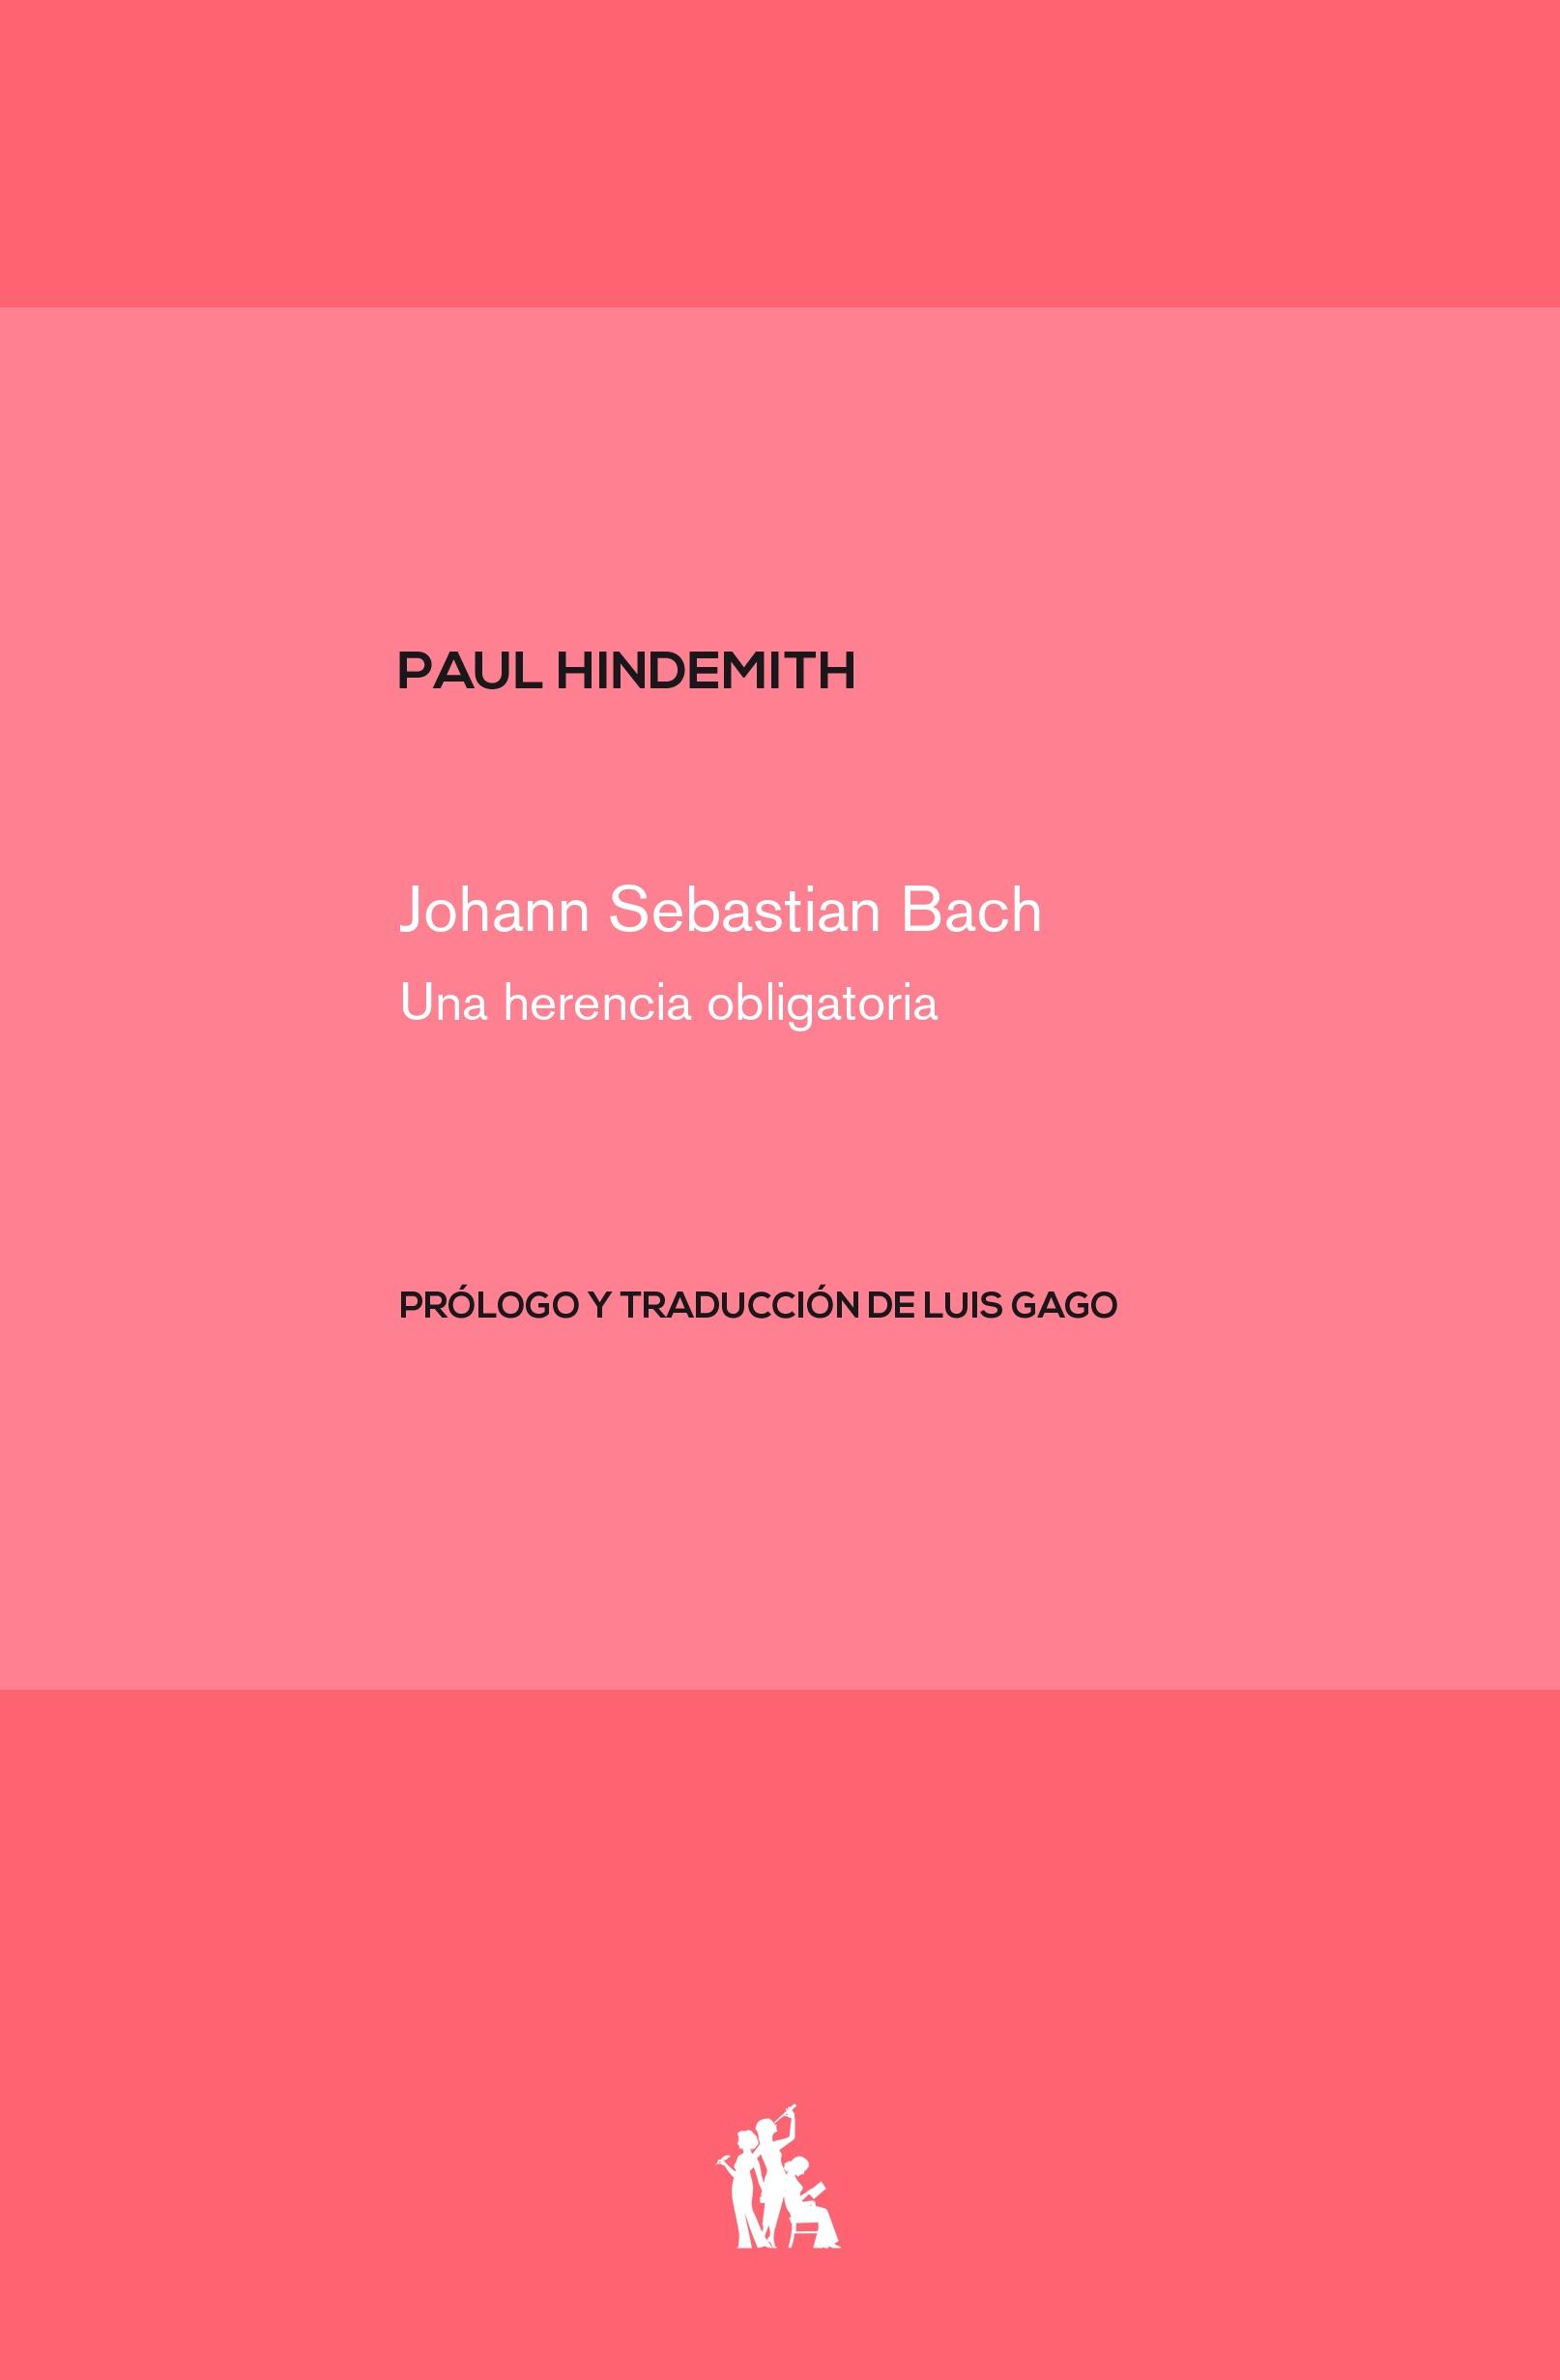 Johann Sebastian Bach "Una Herencia Obligatoria". 